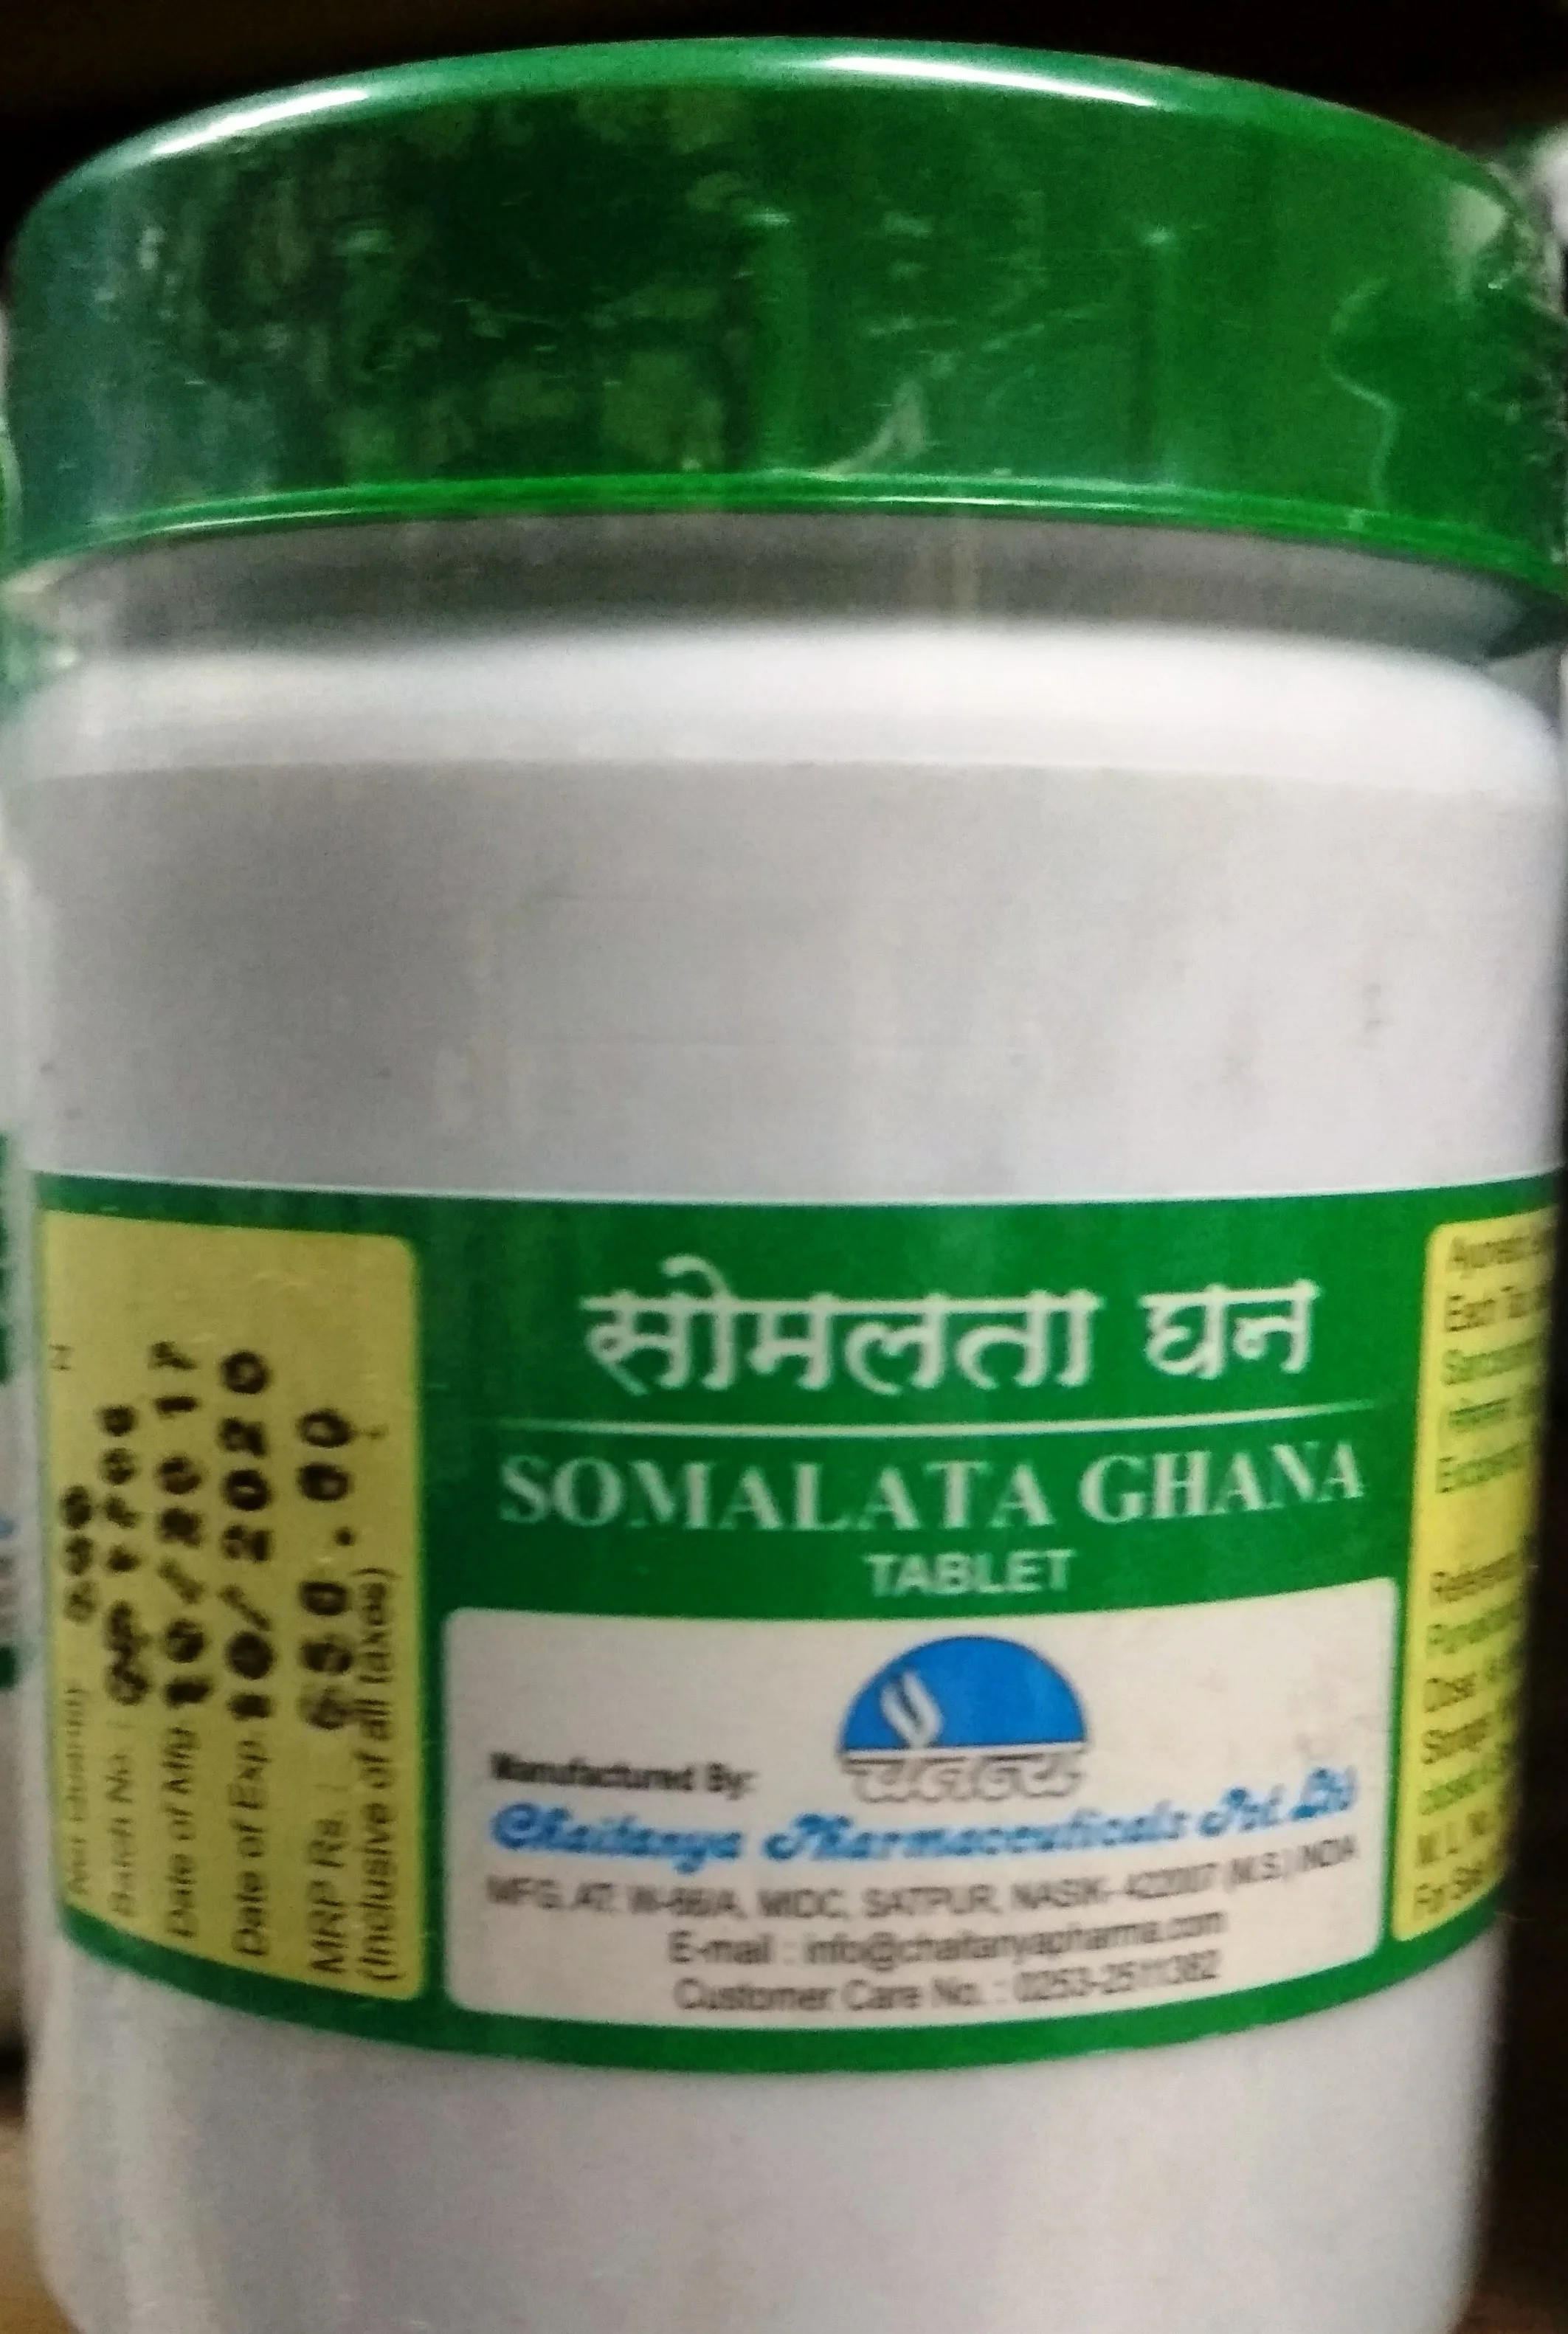 somalata ghana 500tab upto 20% off free shipping Chaitanya Pharmaceuticals